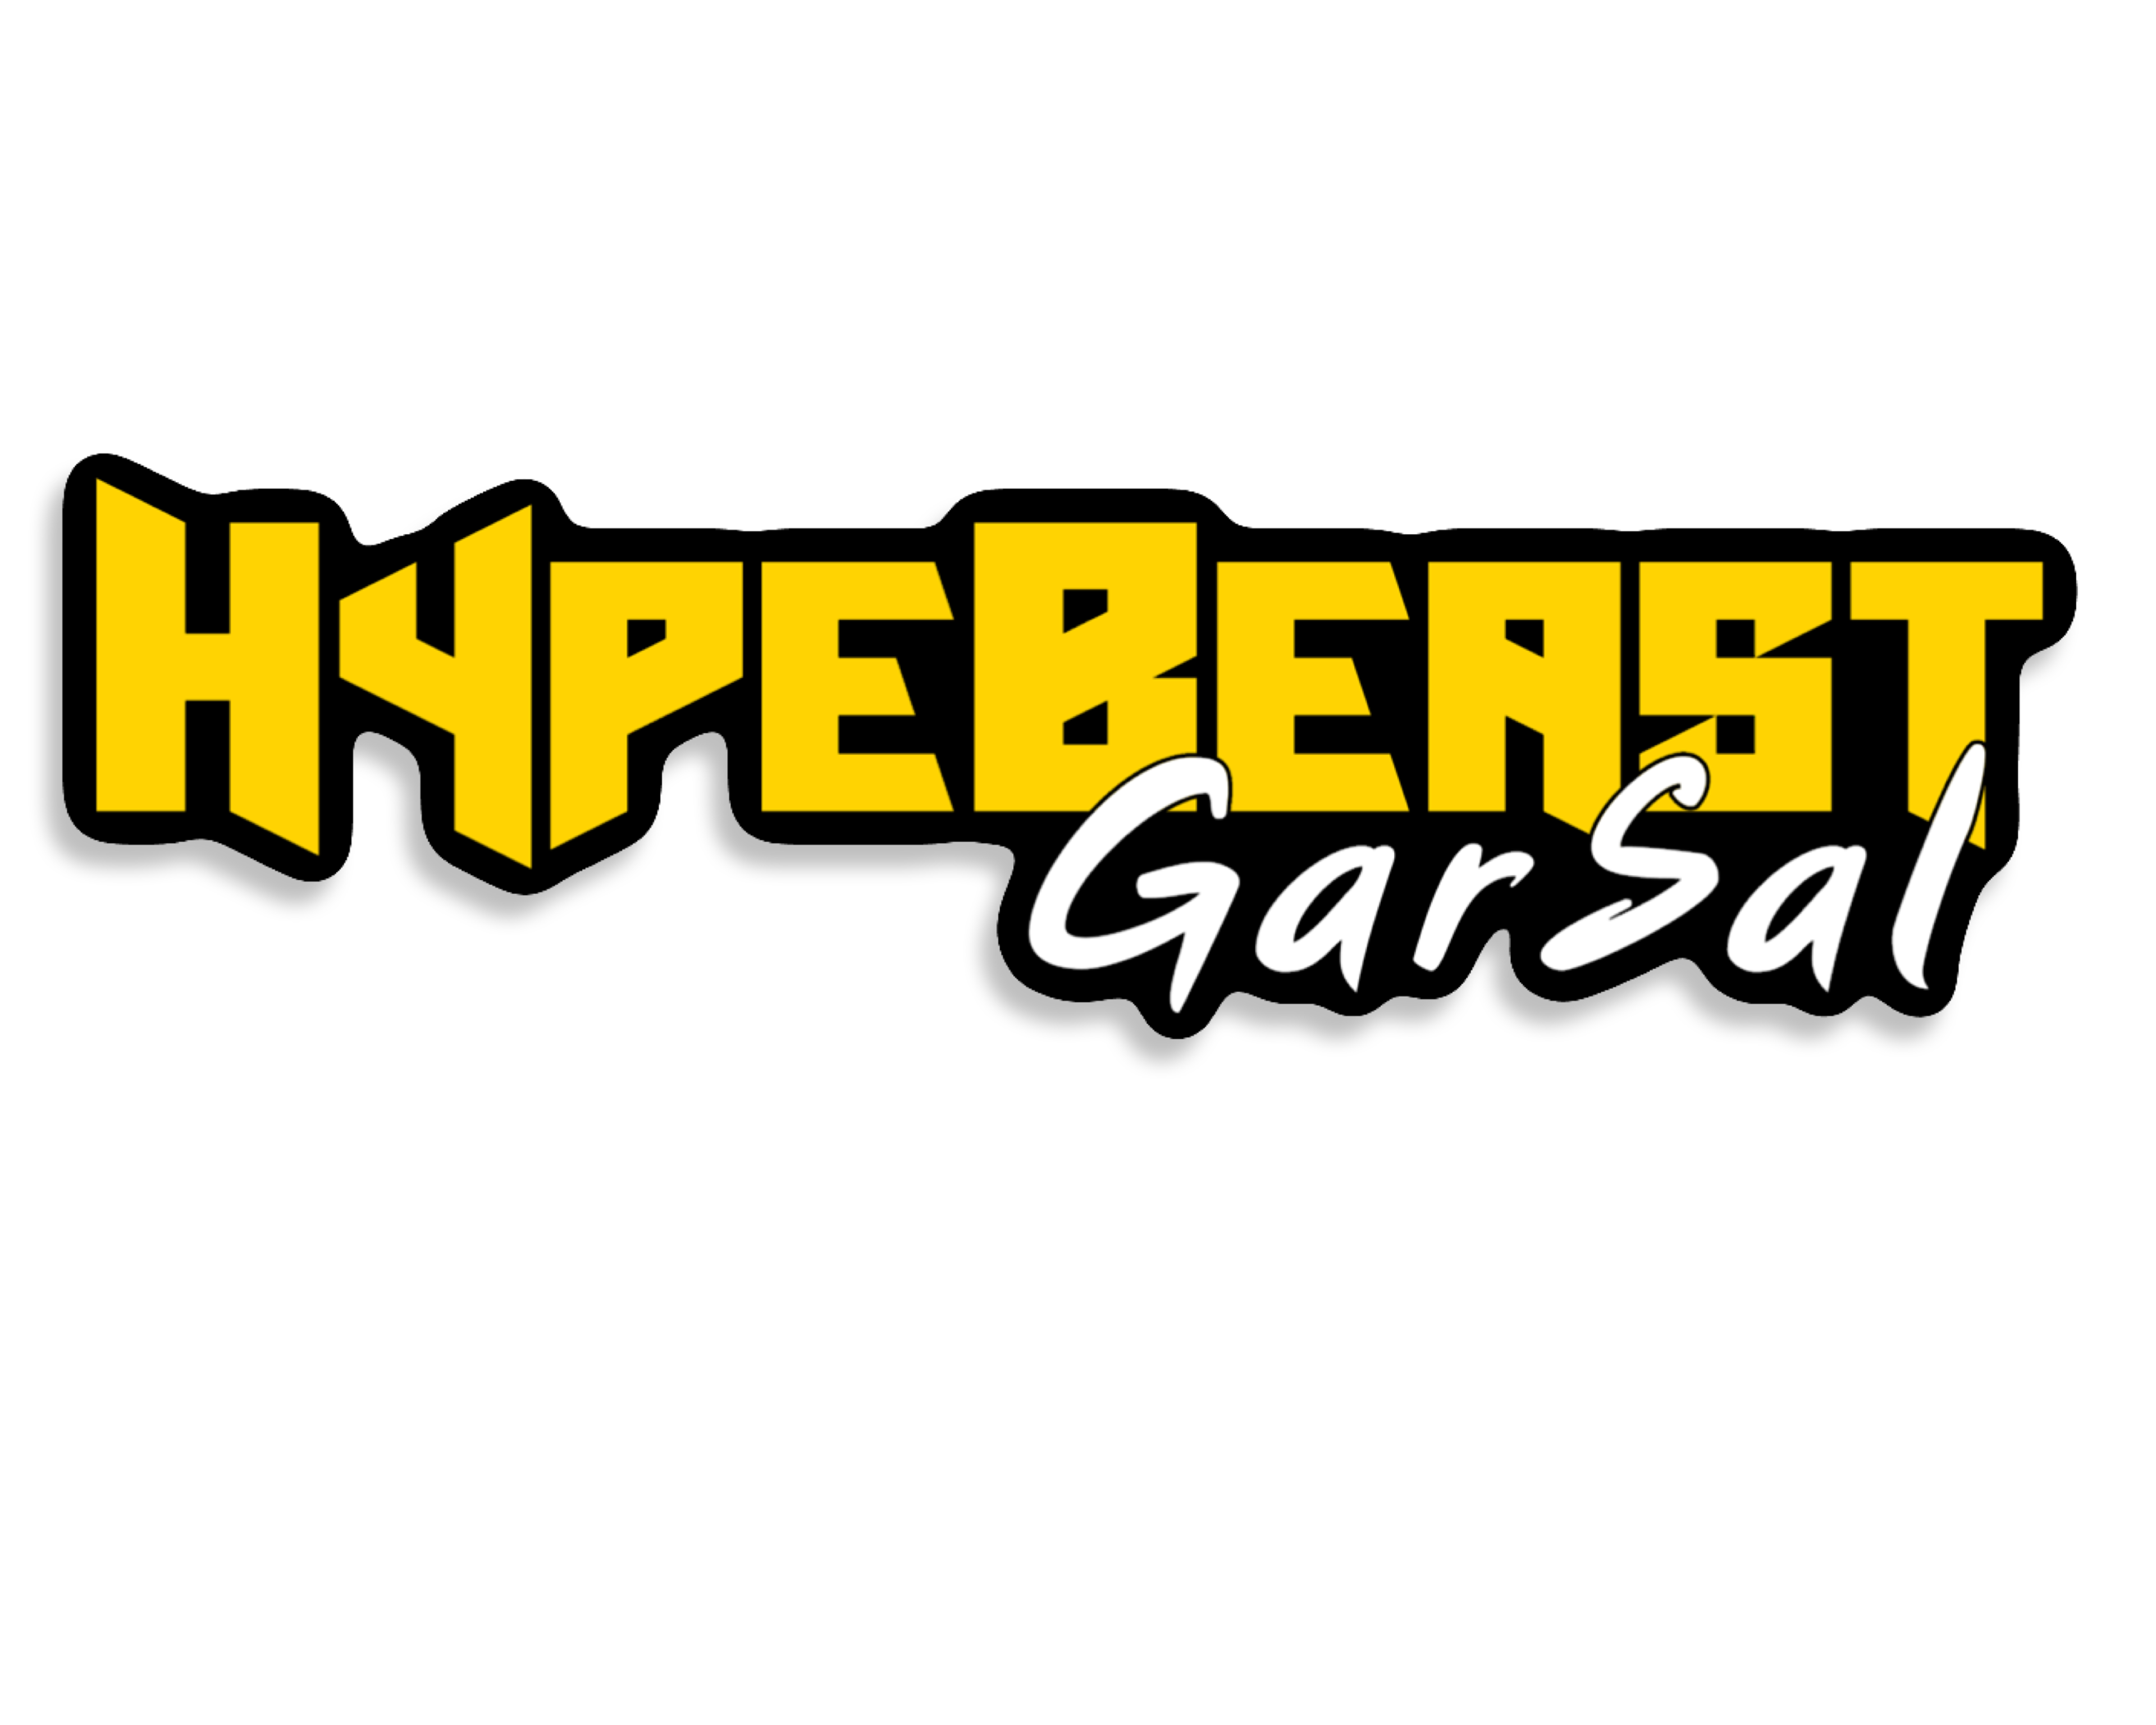 Hypebeast Garsal